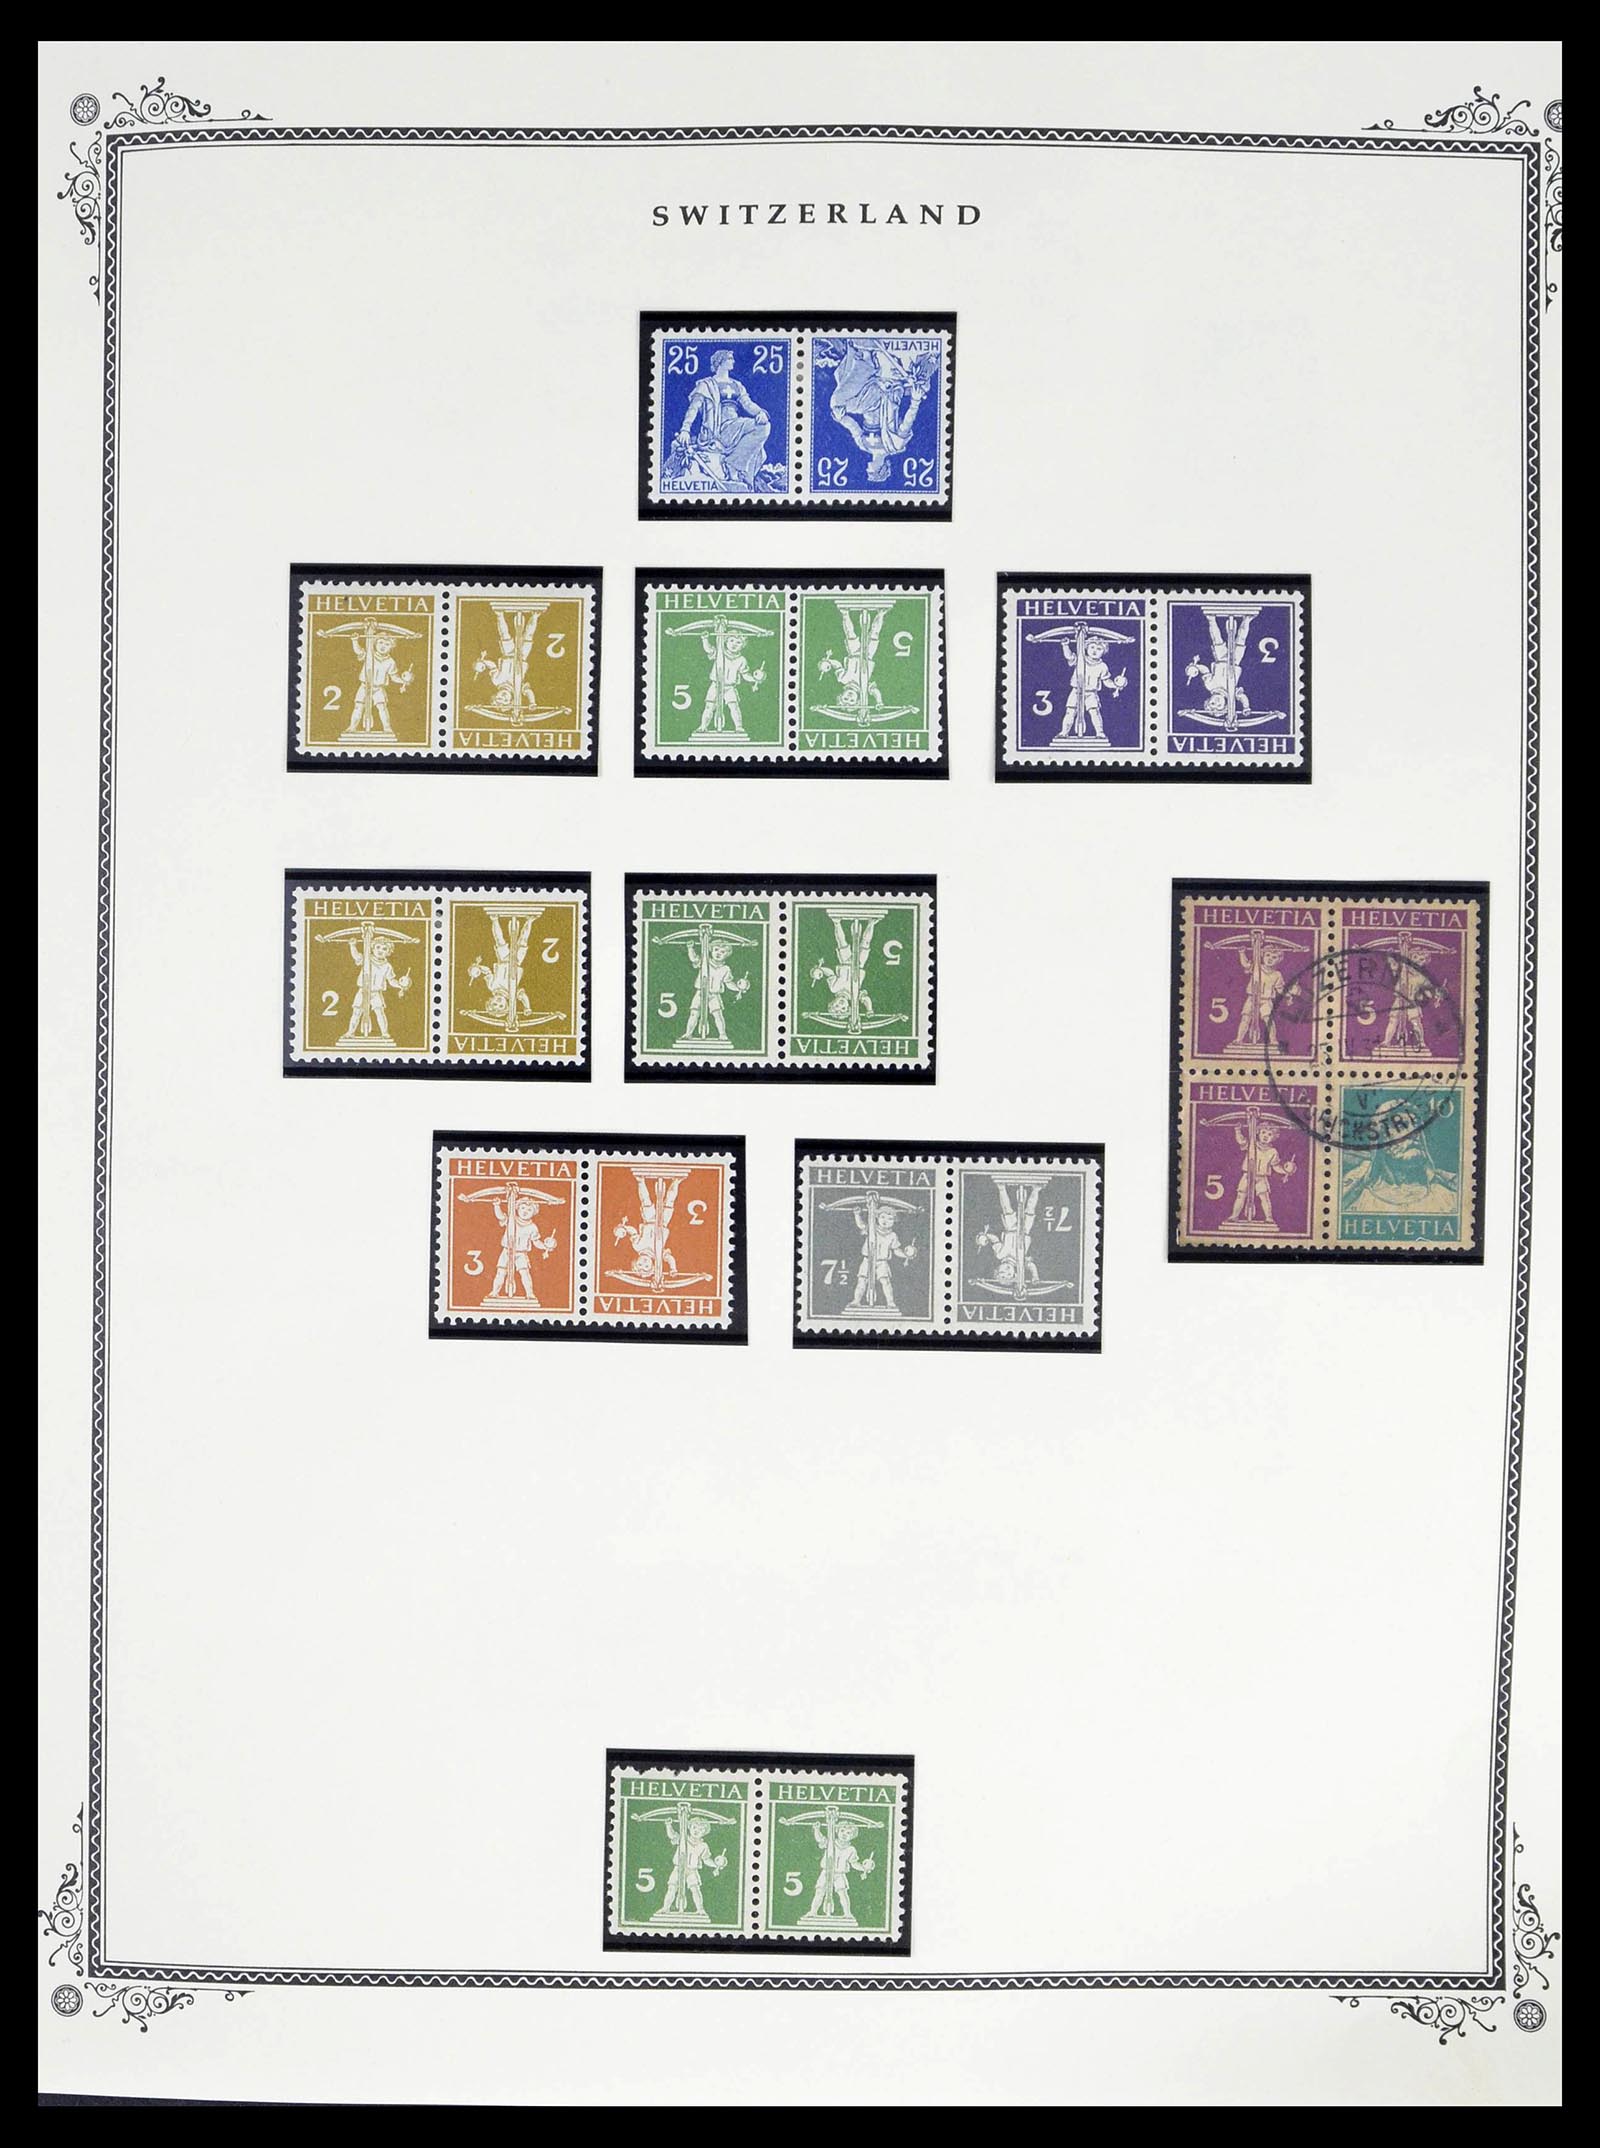 39178 0012 - Stamp collection 39178 Switzerland 1850-1989.